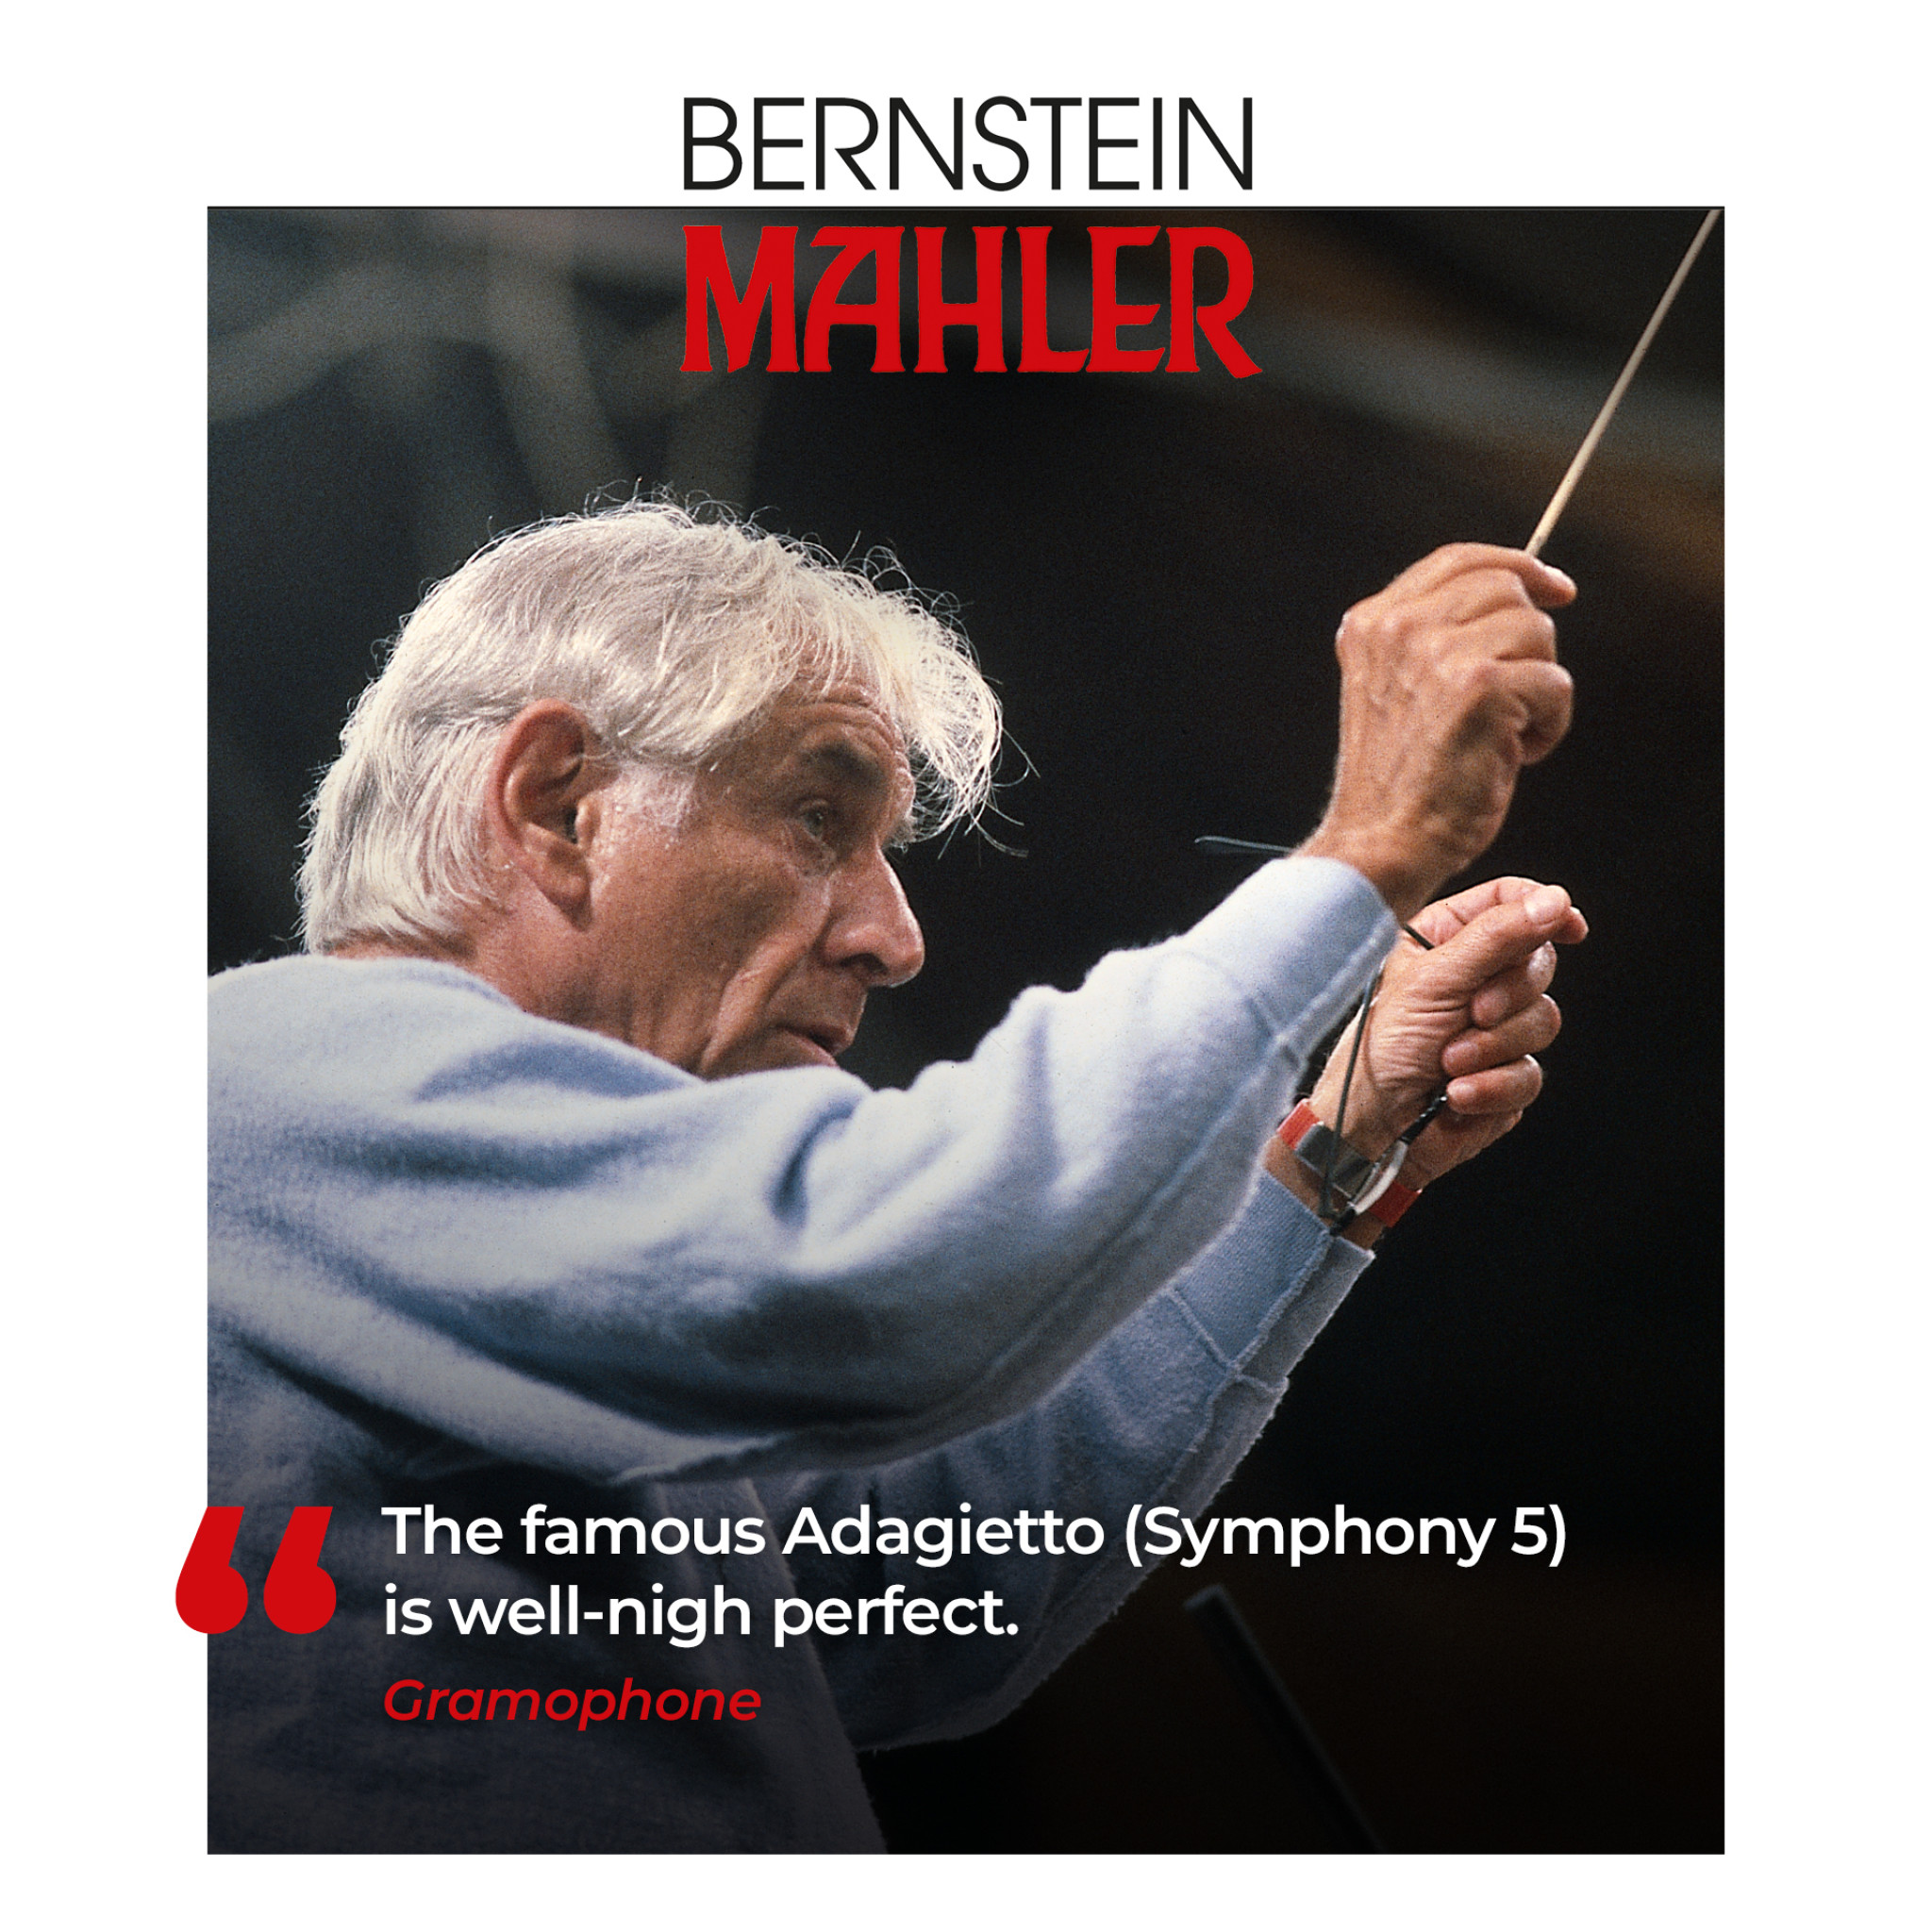 Bernstein - Mahler: Complete Symphonies Quote Card 3